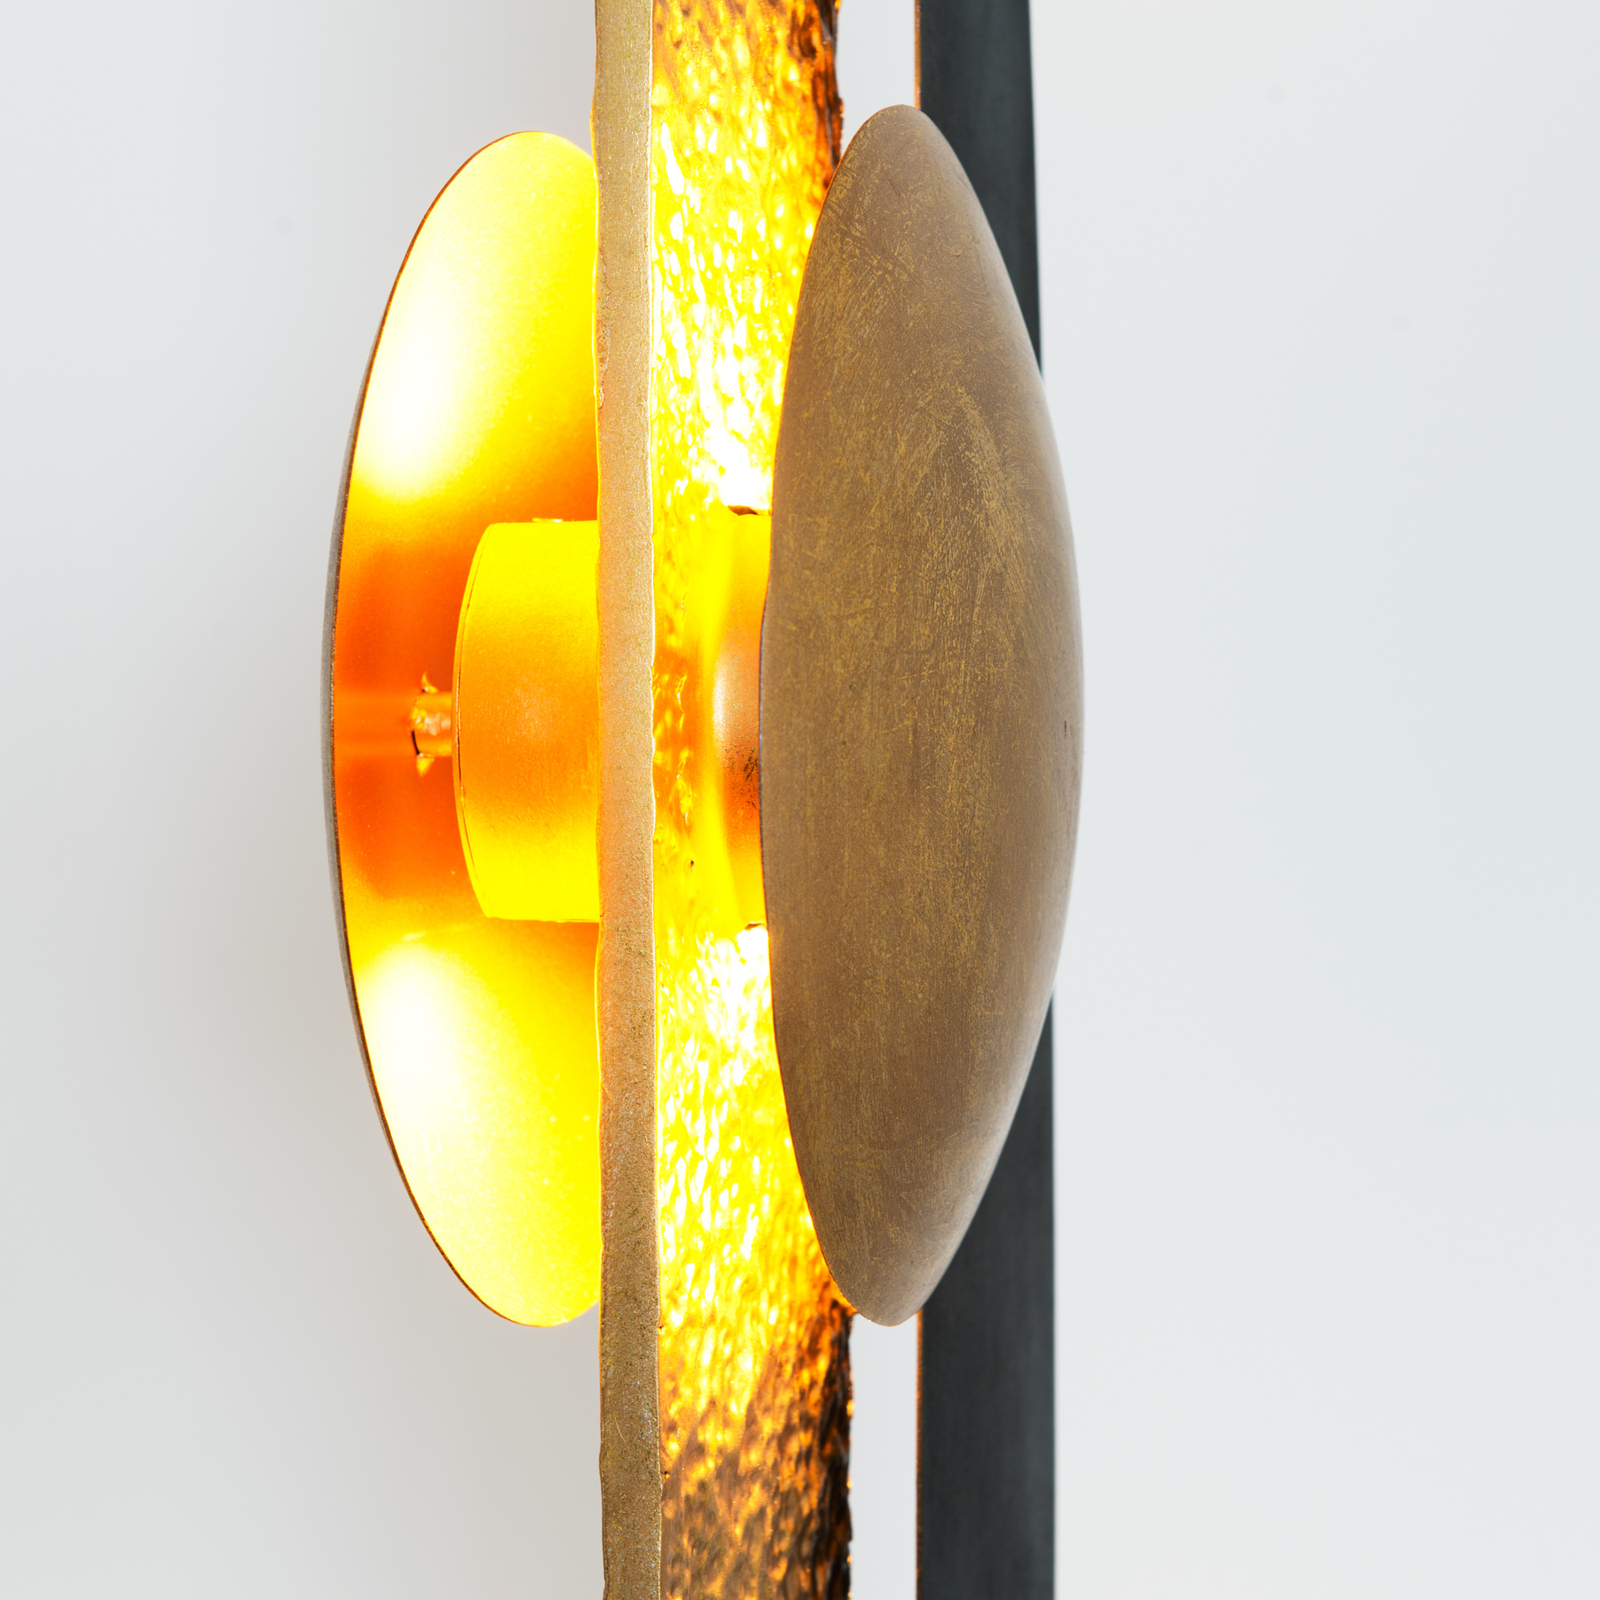 LED vloerlamp La Presa indirect goud/zwart/bruin